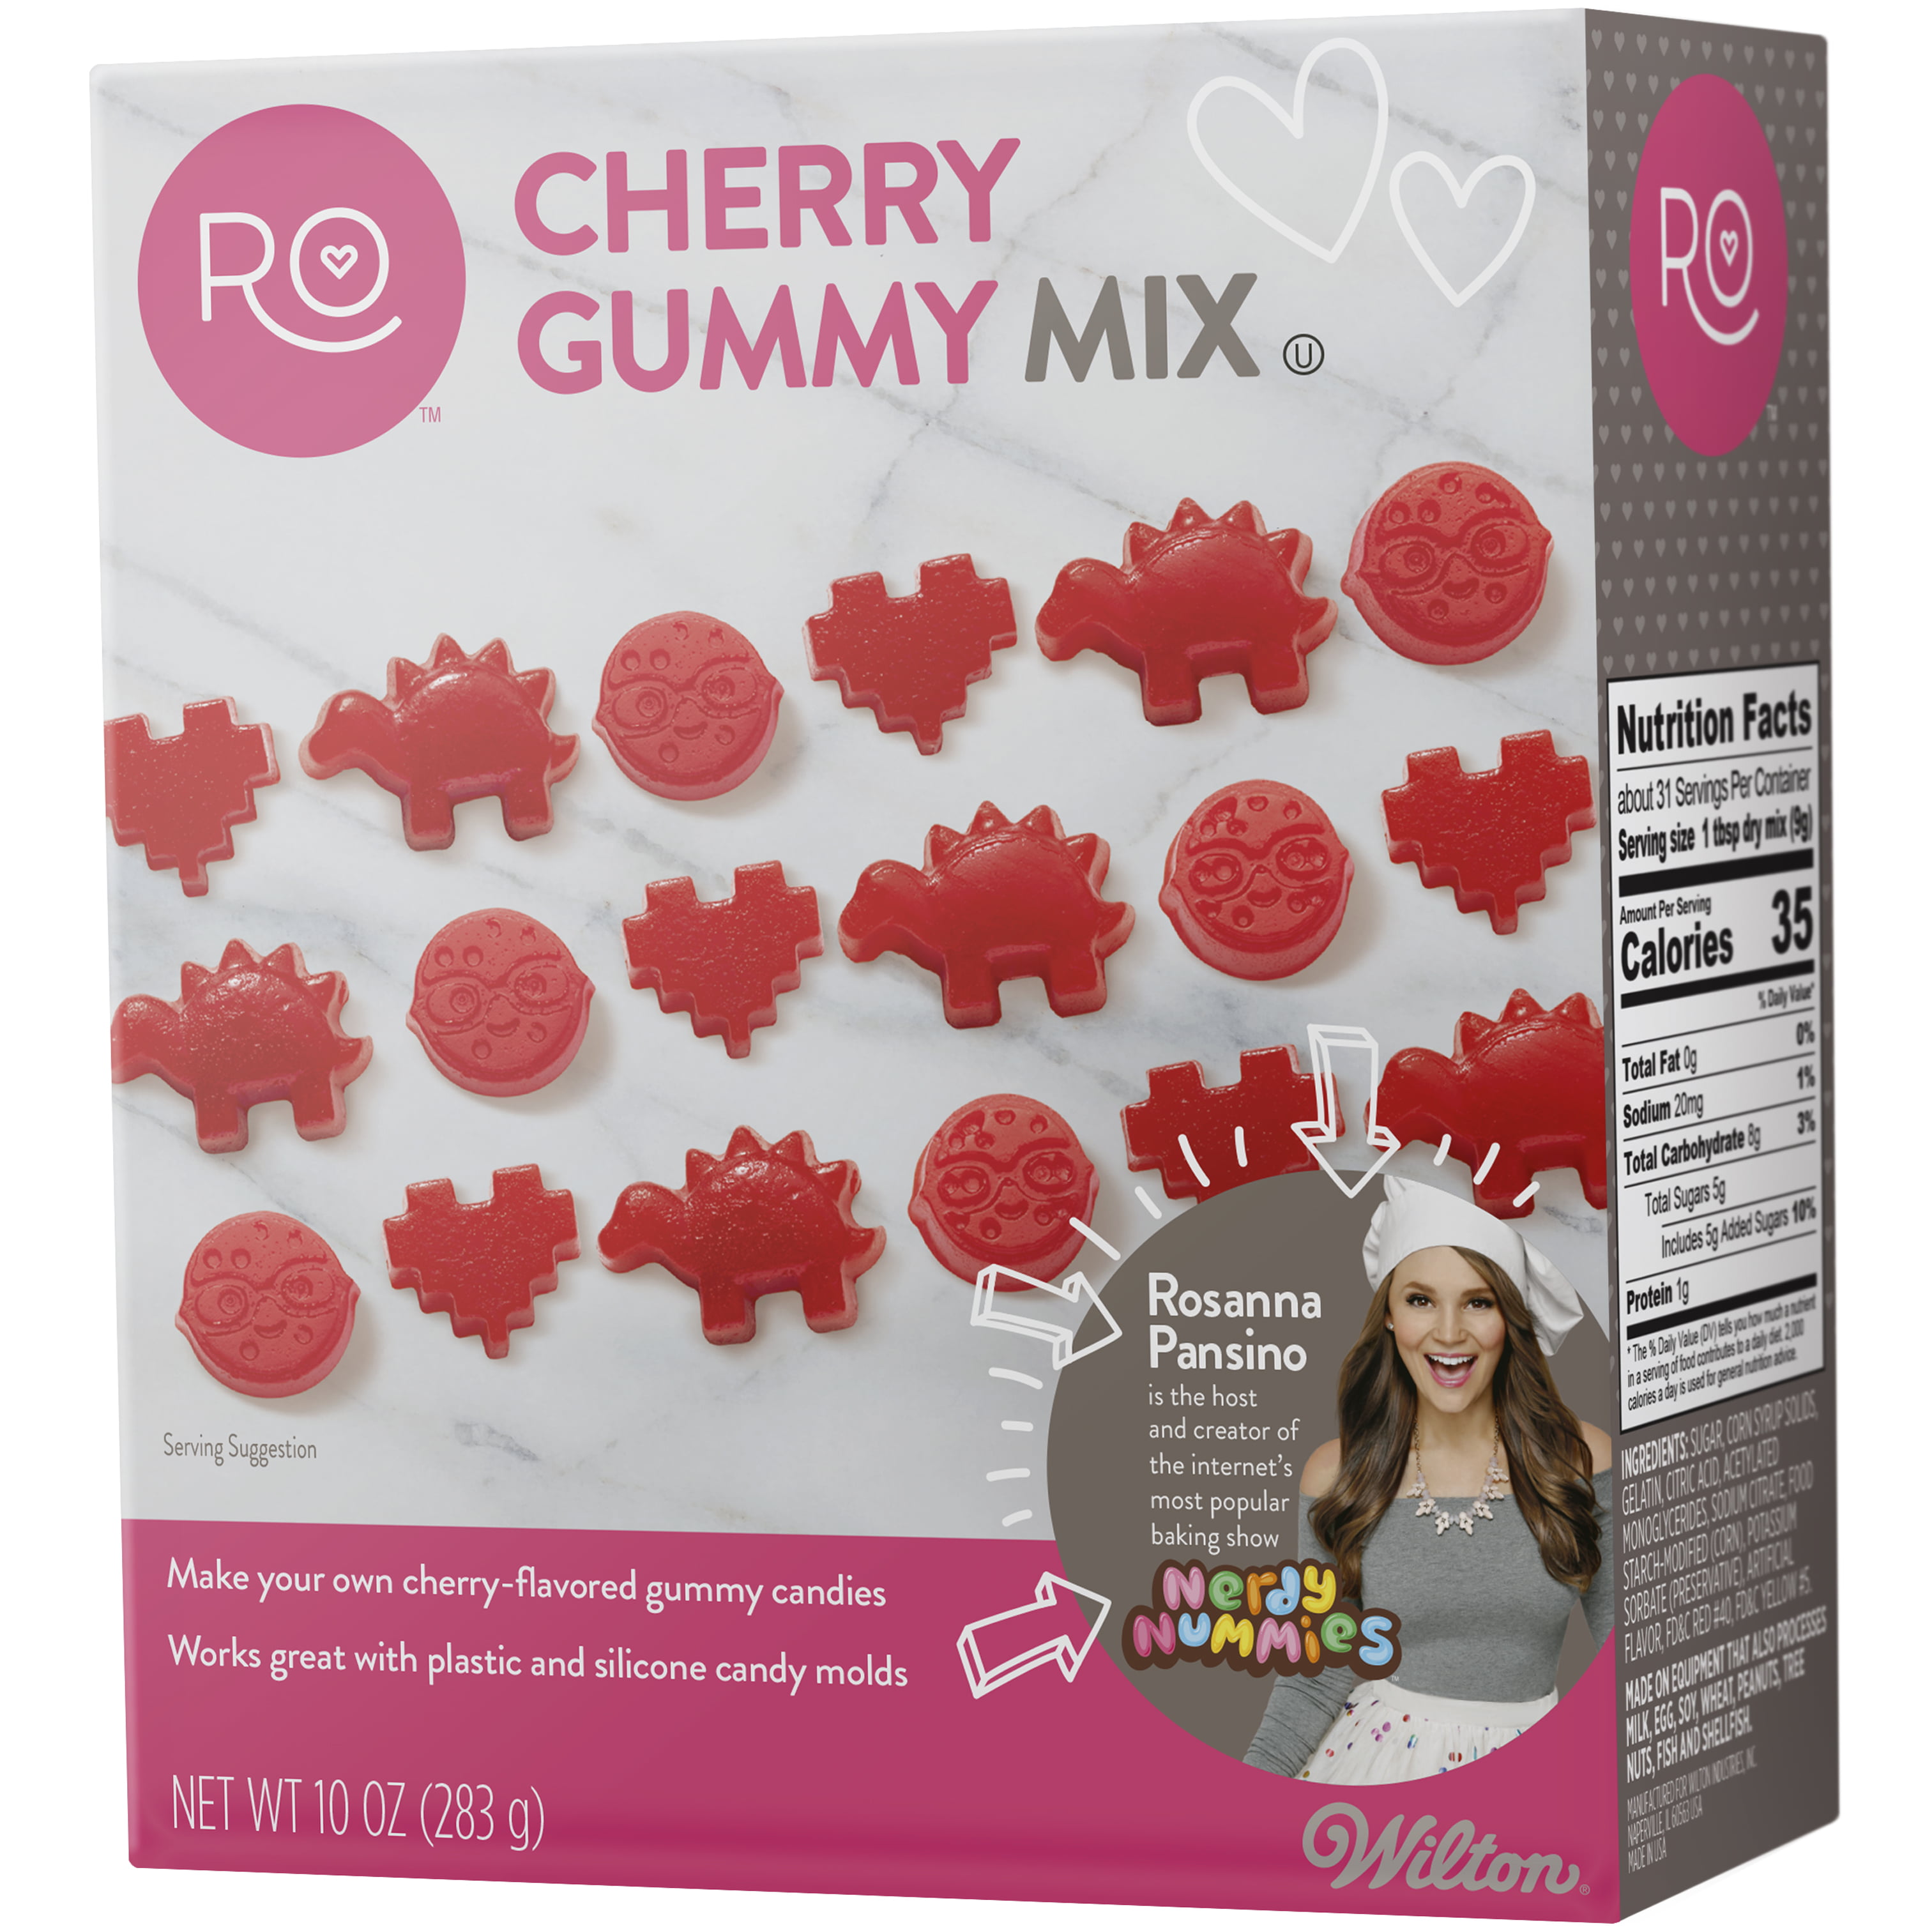 LĒVO Gummy Candy Mixer, Gummy Mold, & Tropical Peach Mix